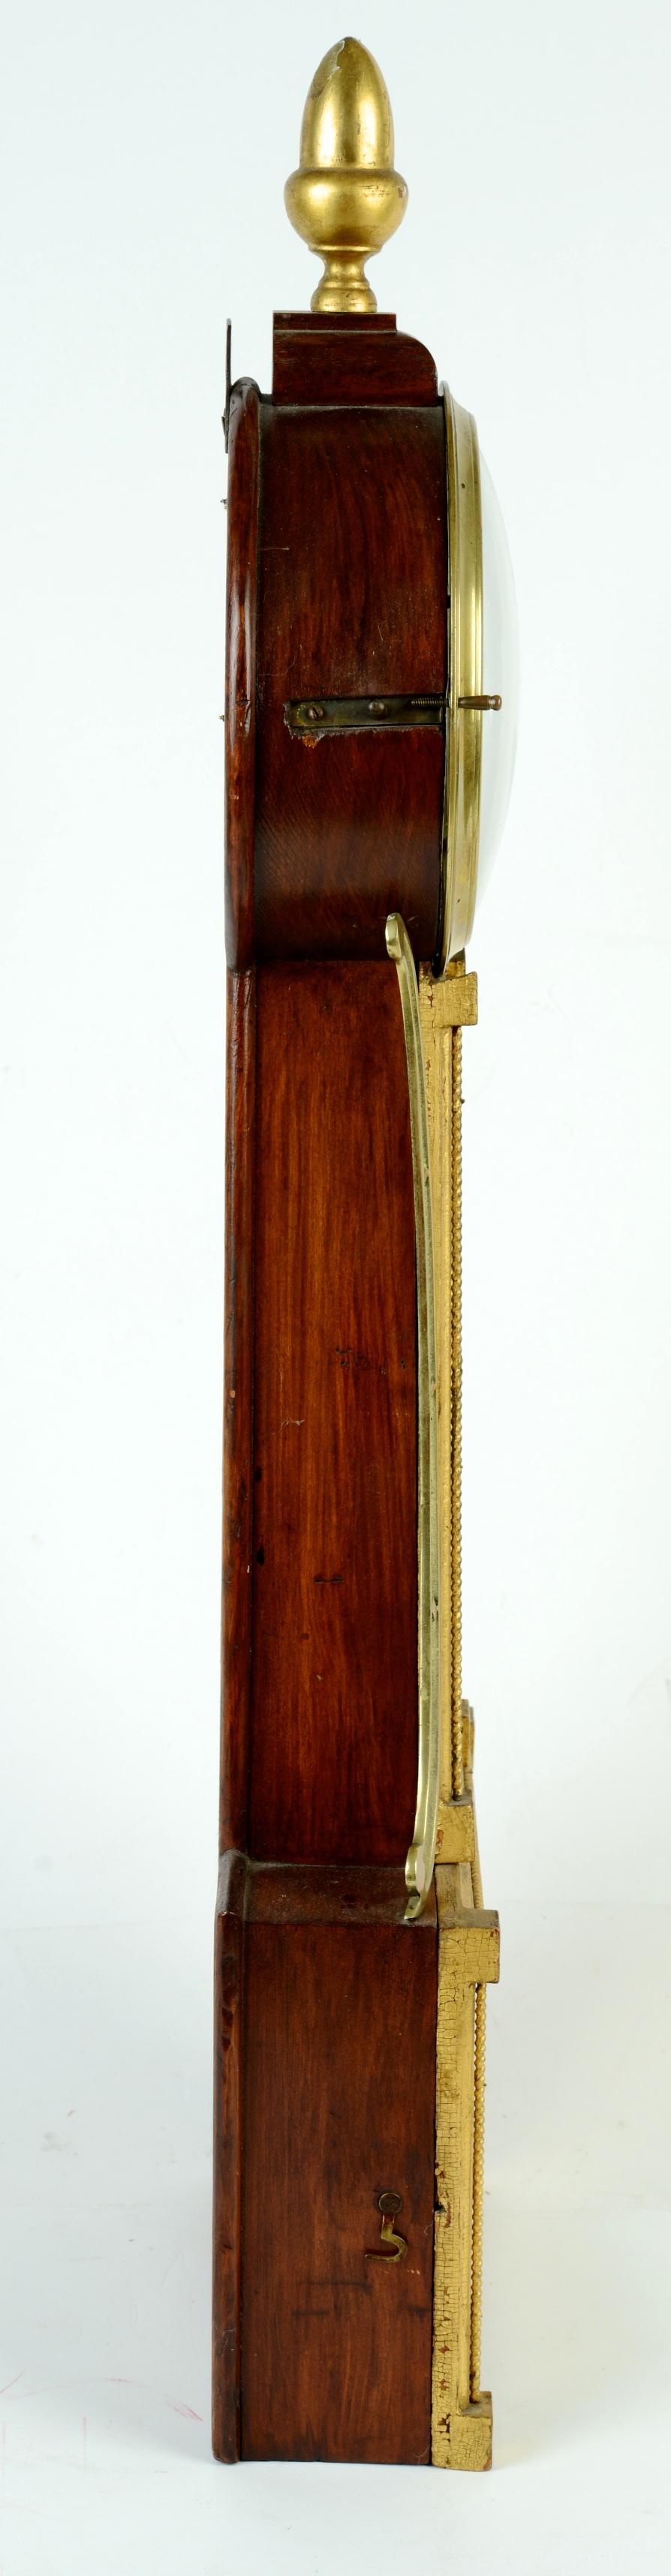 Banjo Clock, c1820, Patent Timepiece 2